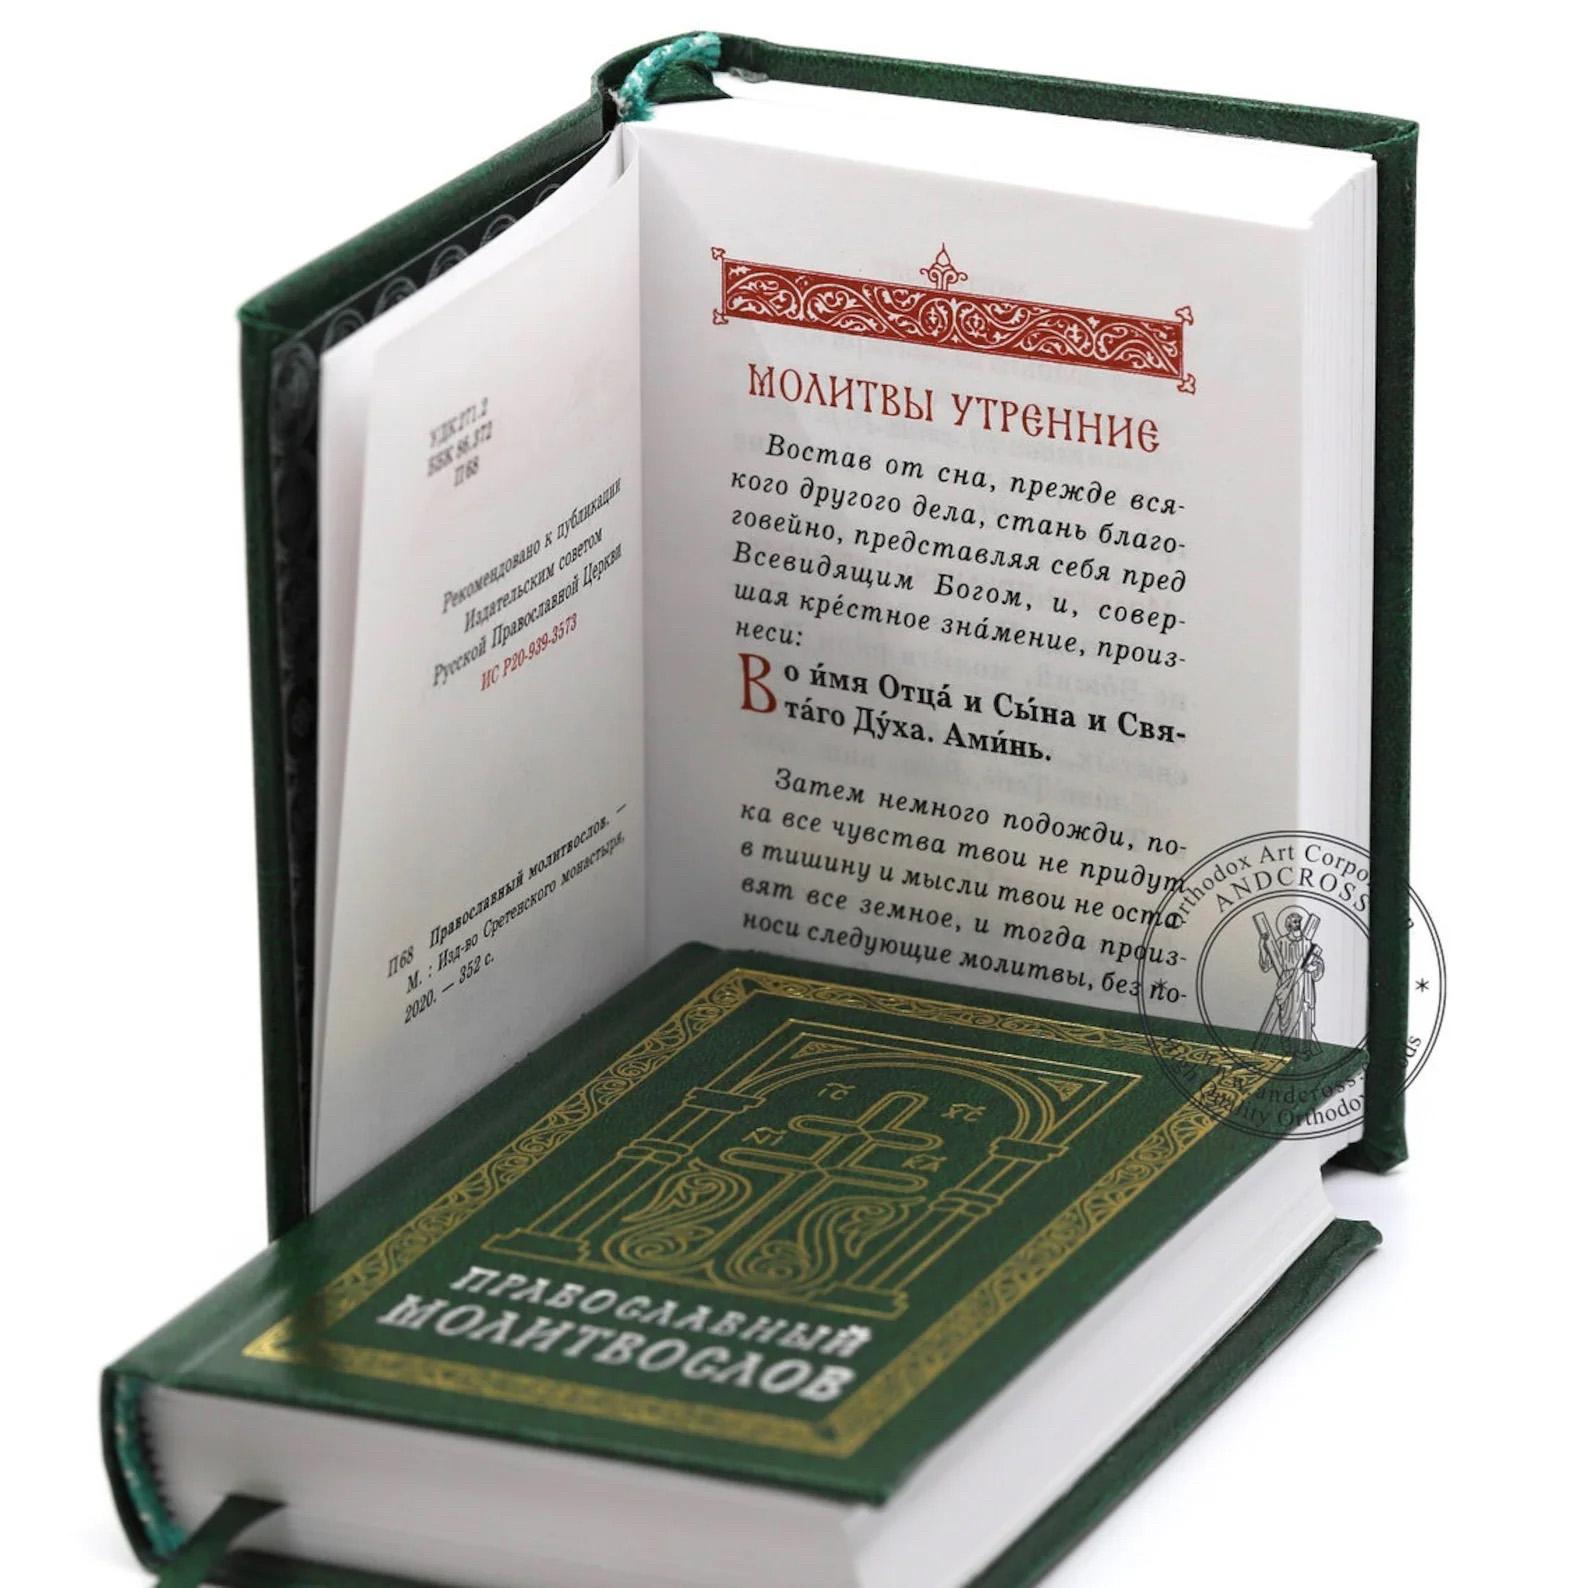 Orthodox Pocket Prayer Book Russian Language